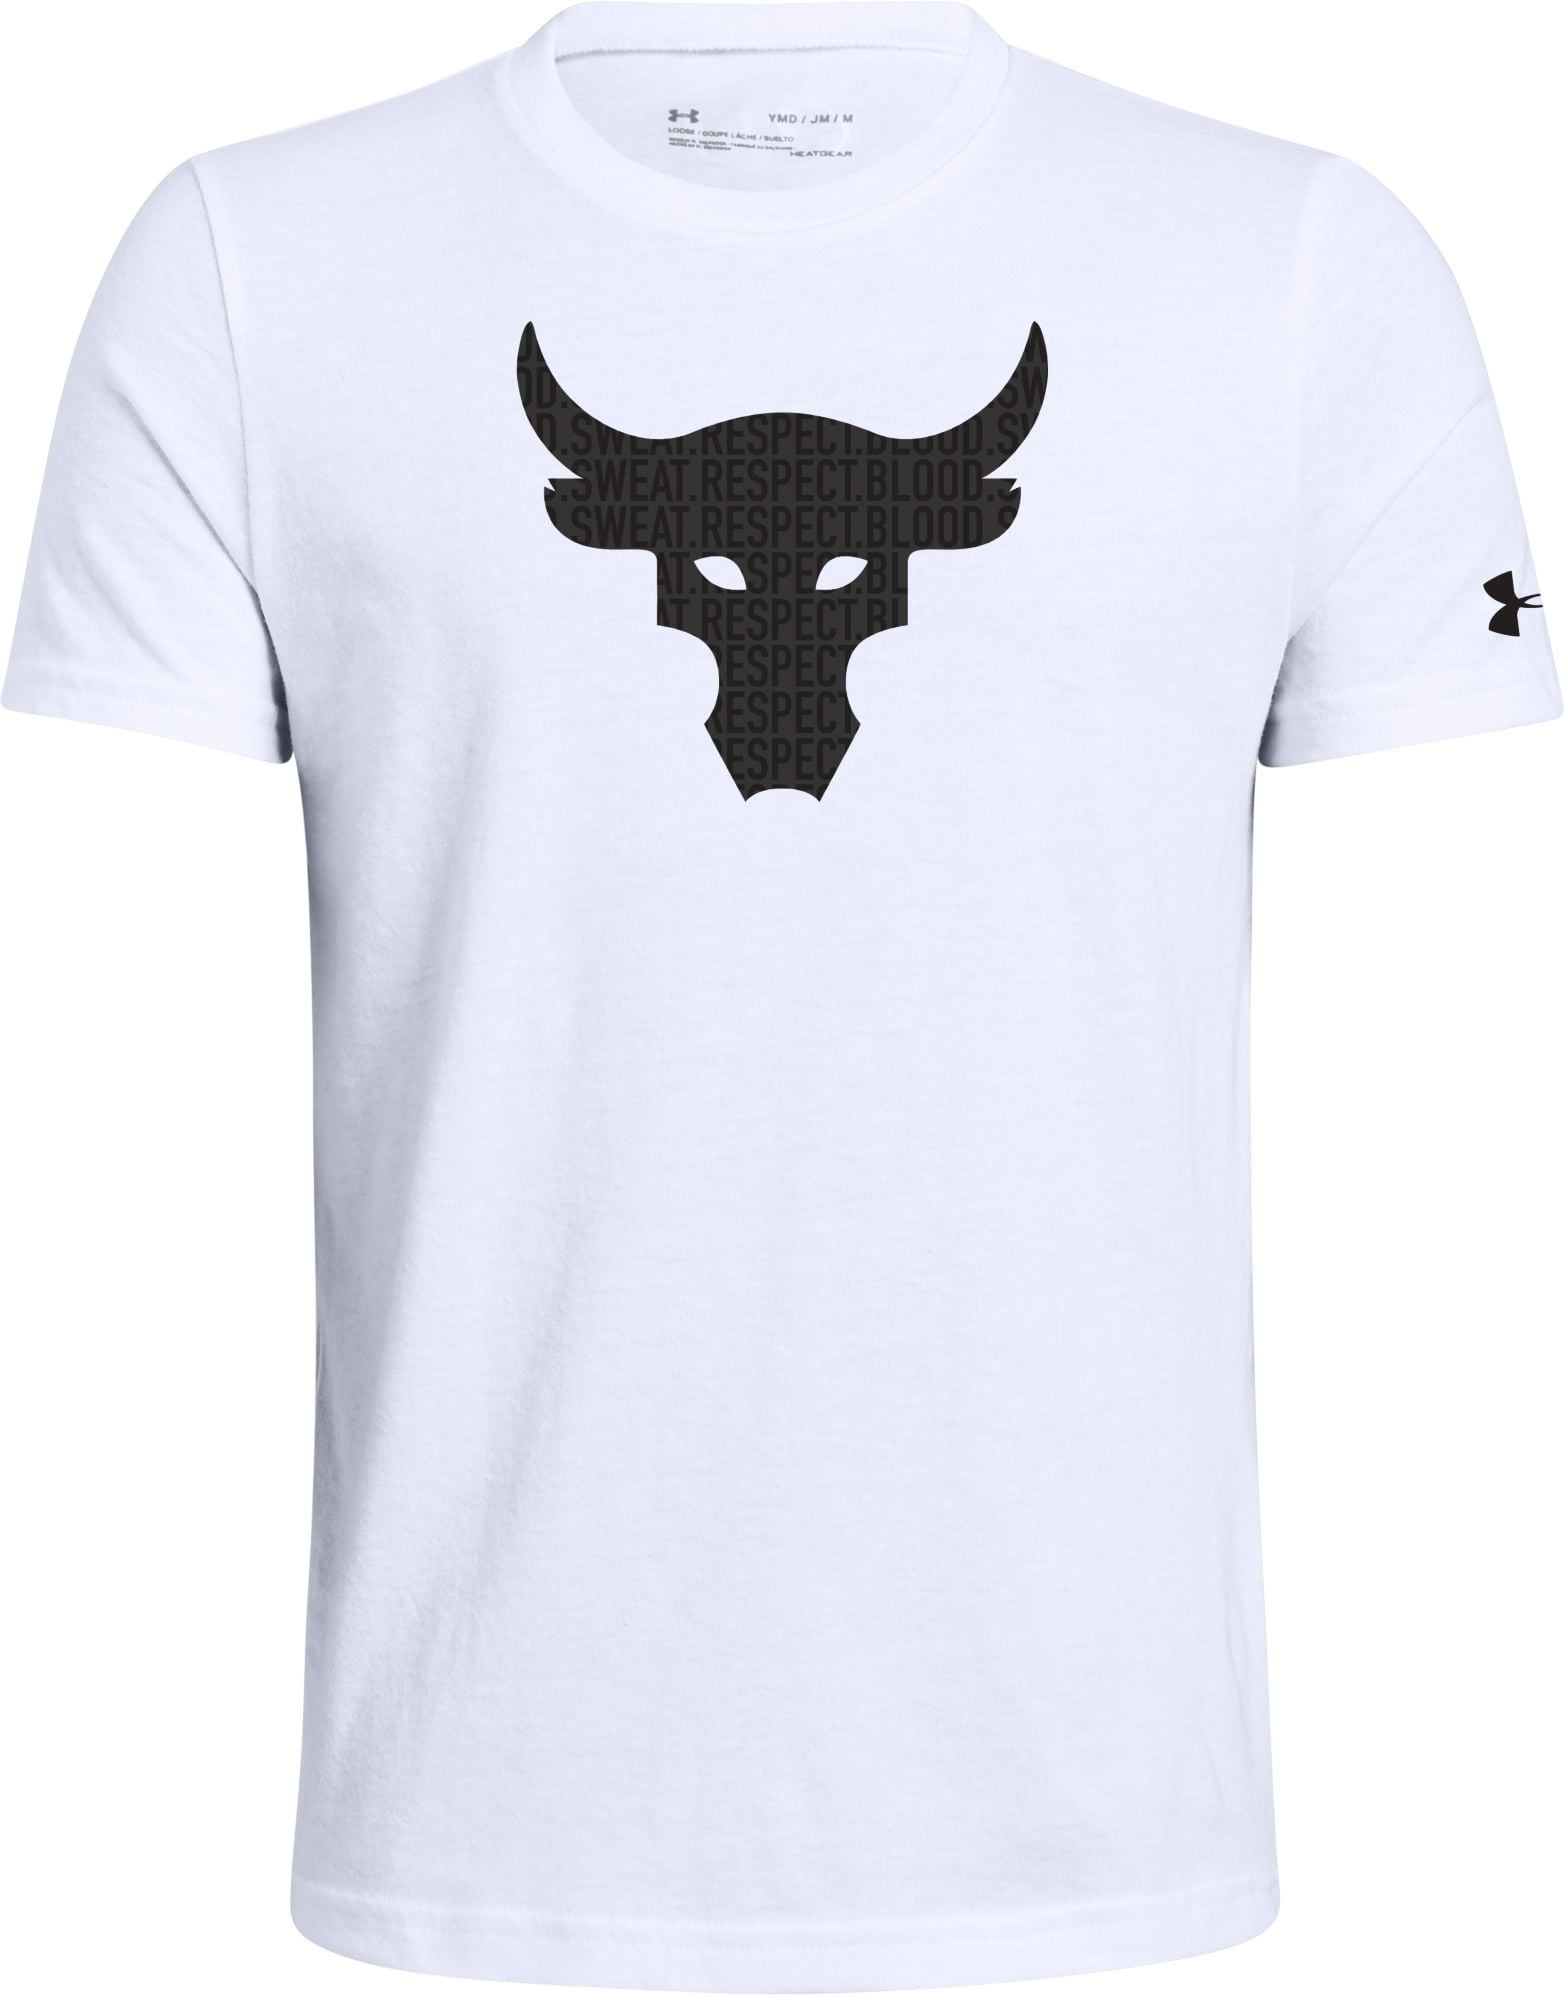 the rock brahma bull shirt